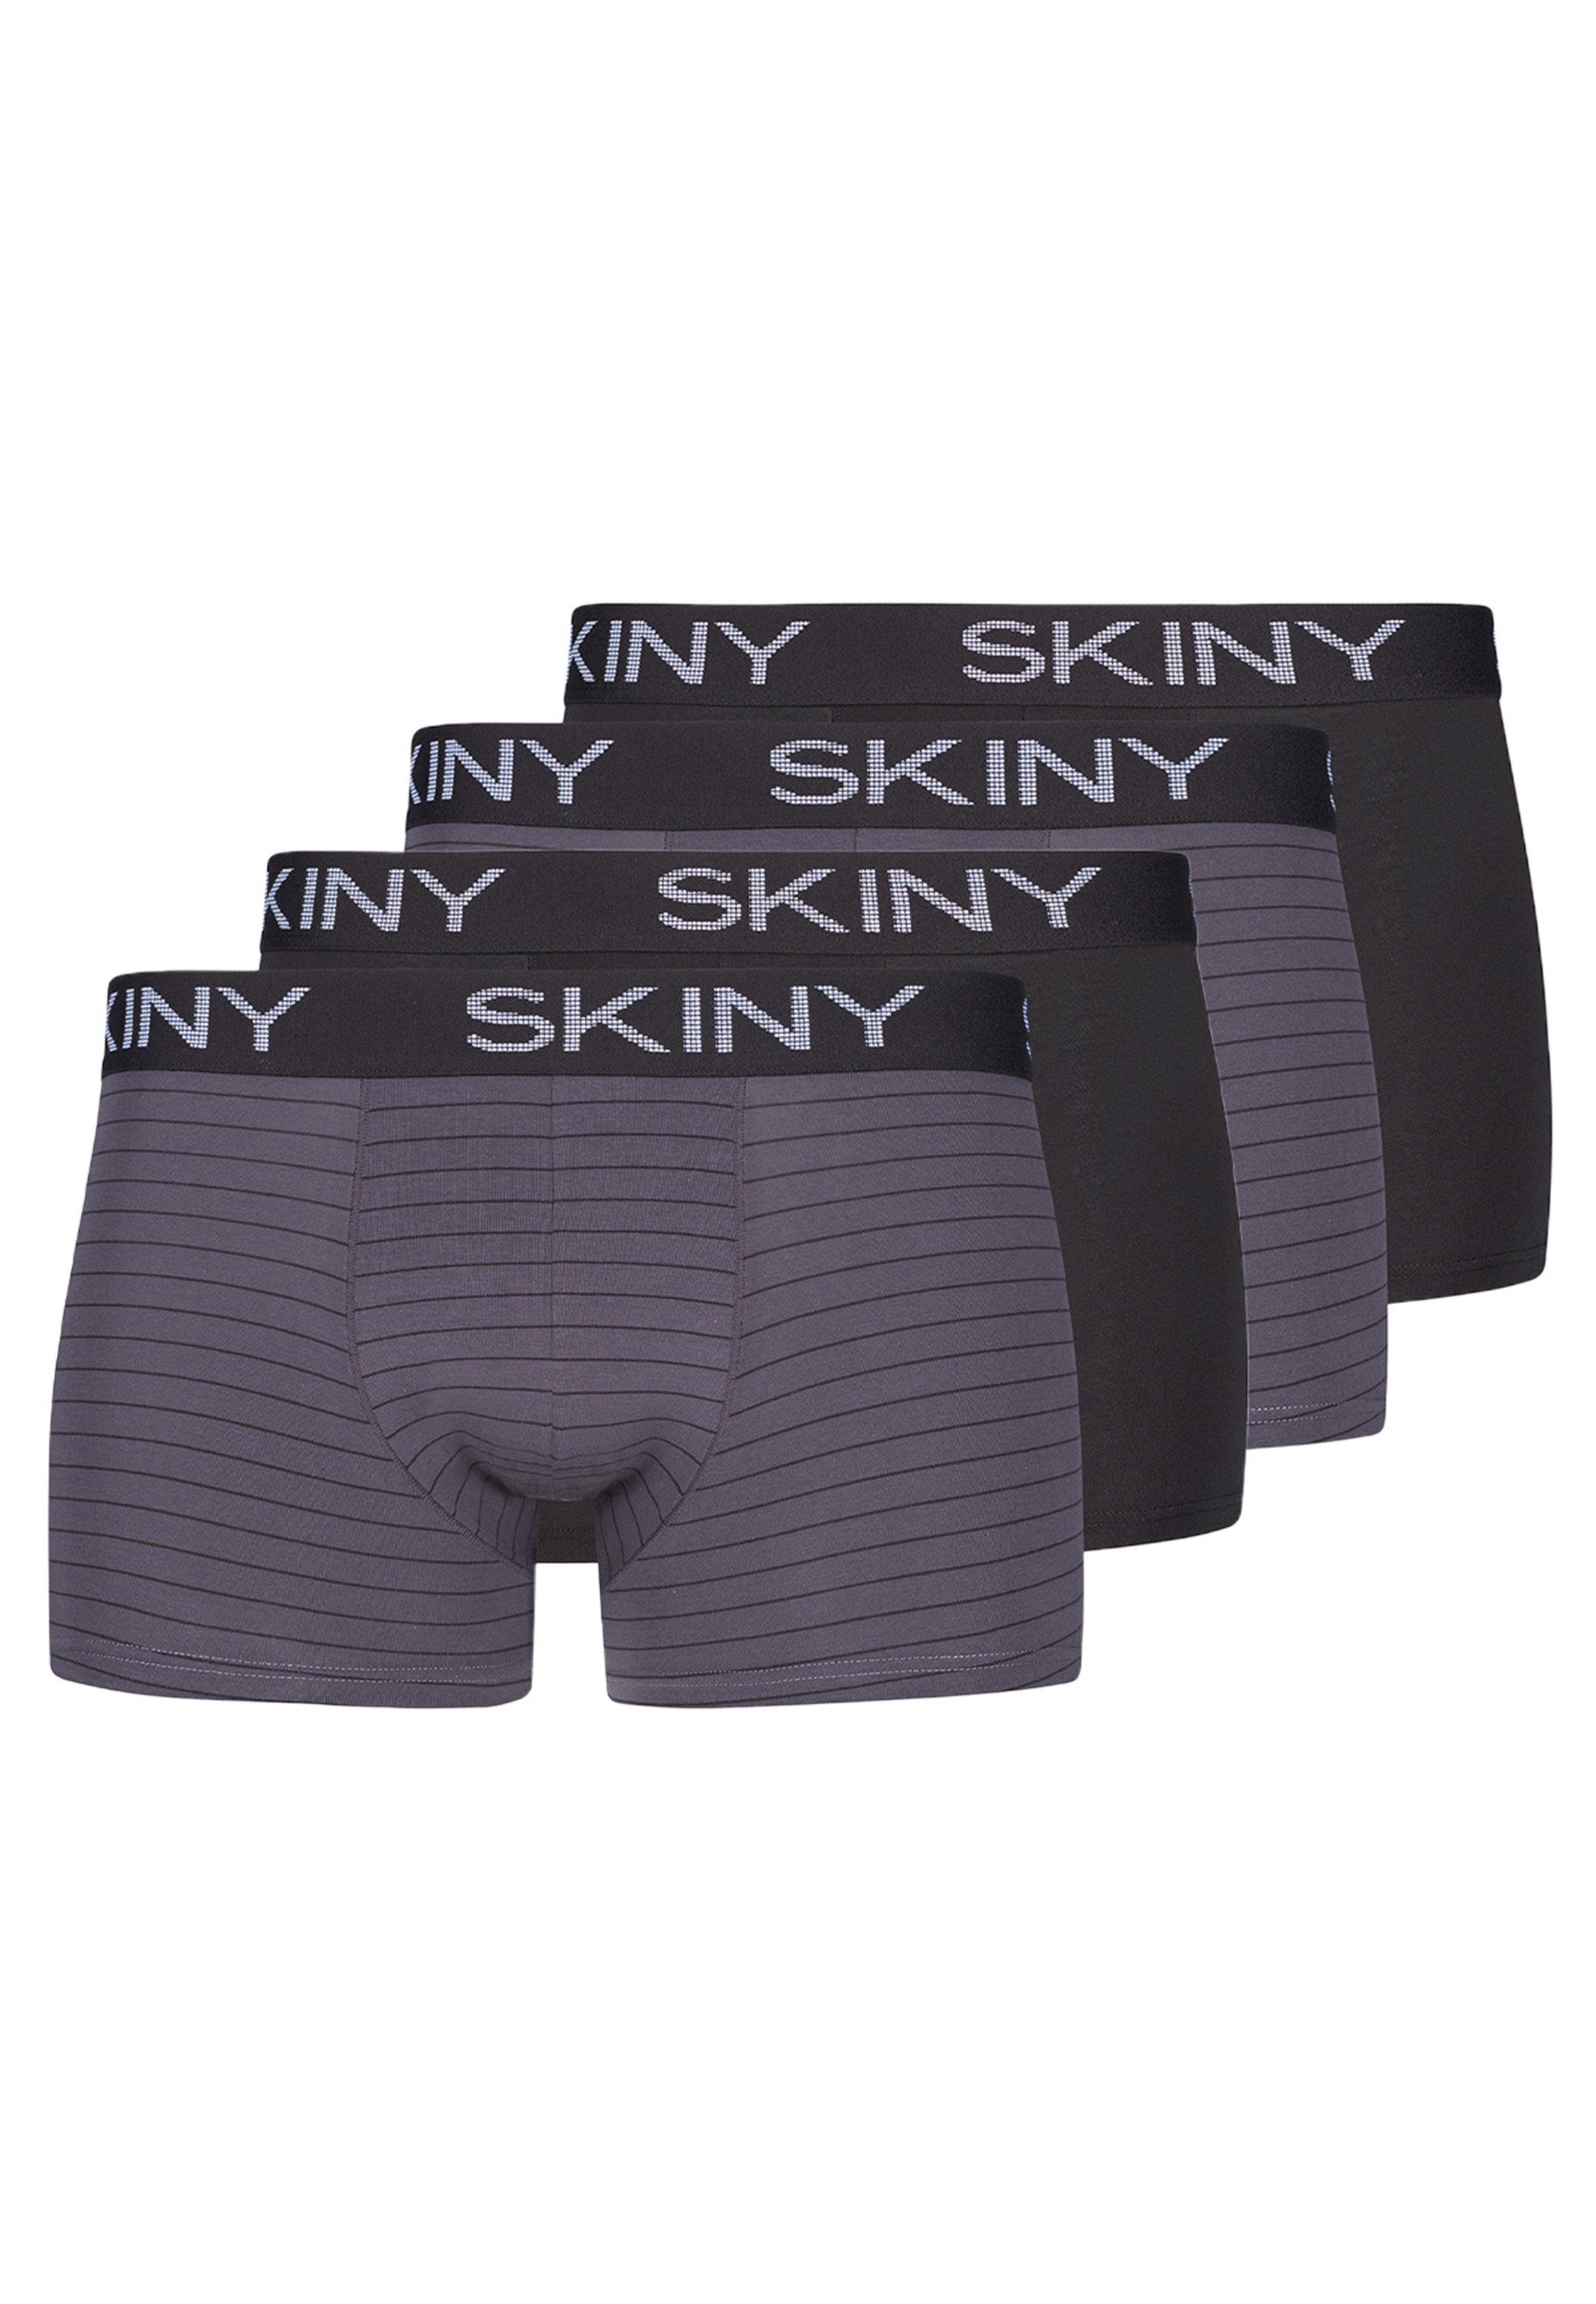 Skiny Retro Boxer 4er Pack Cotton (Spar-Set, 4-St) Retro Short / Pant - Baumwolle - Ohne Eingriff - Körpernaher Passform Anthracite Stripe Selection